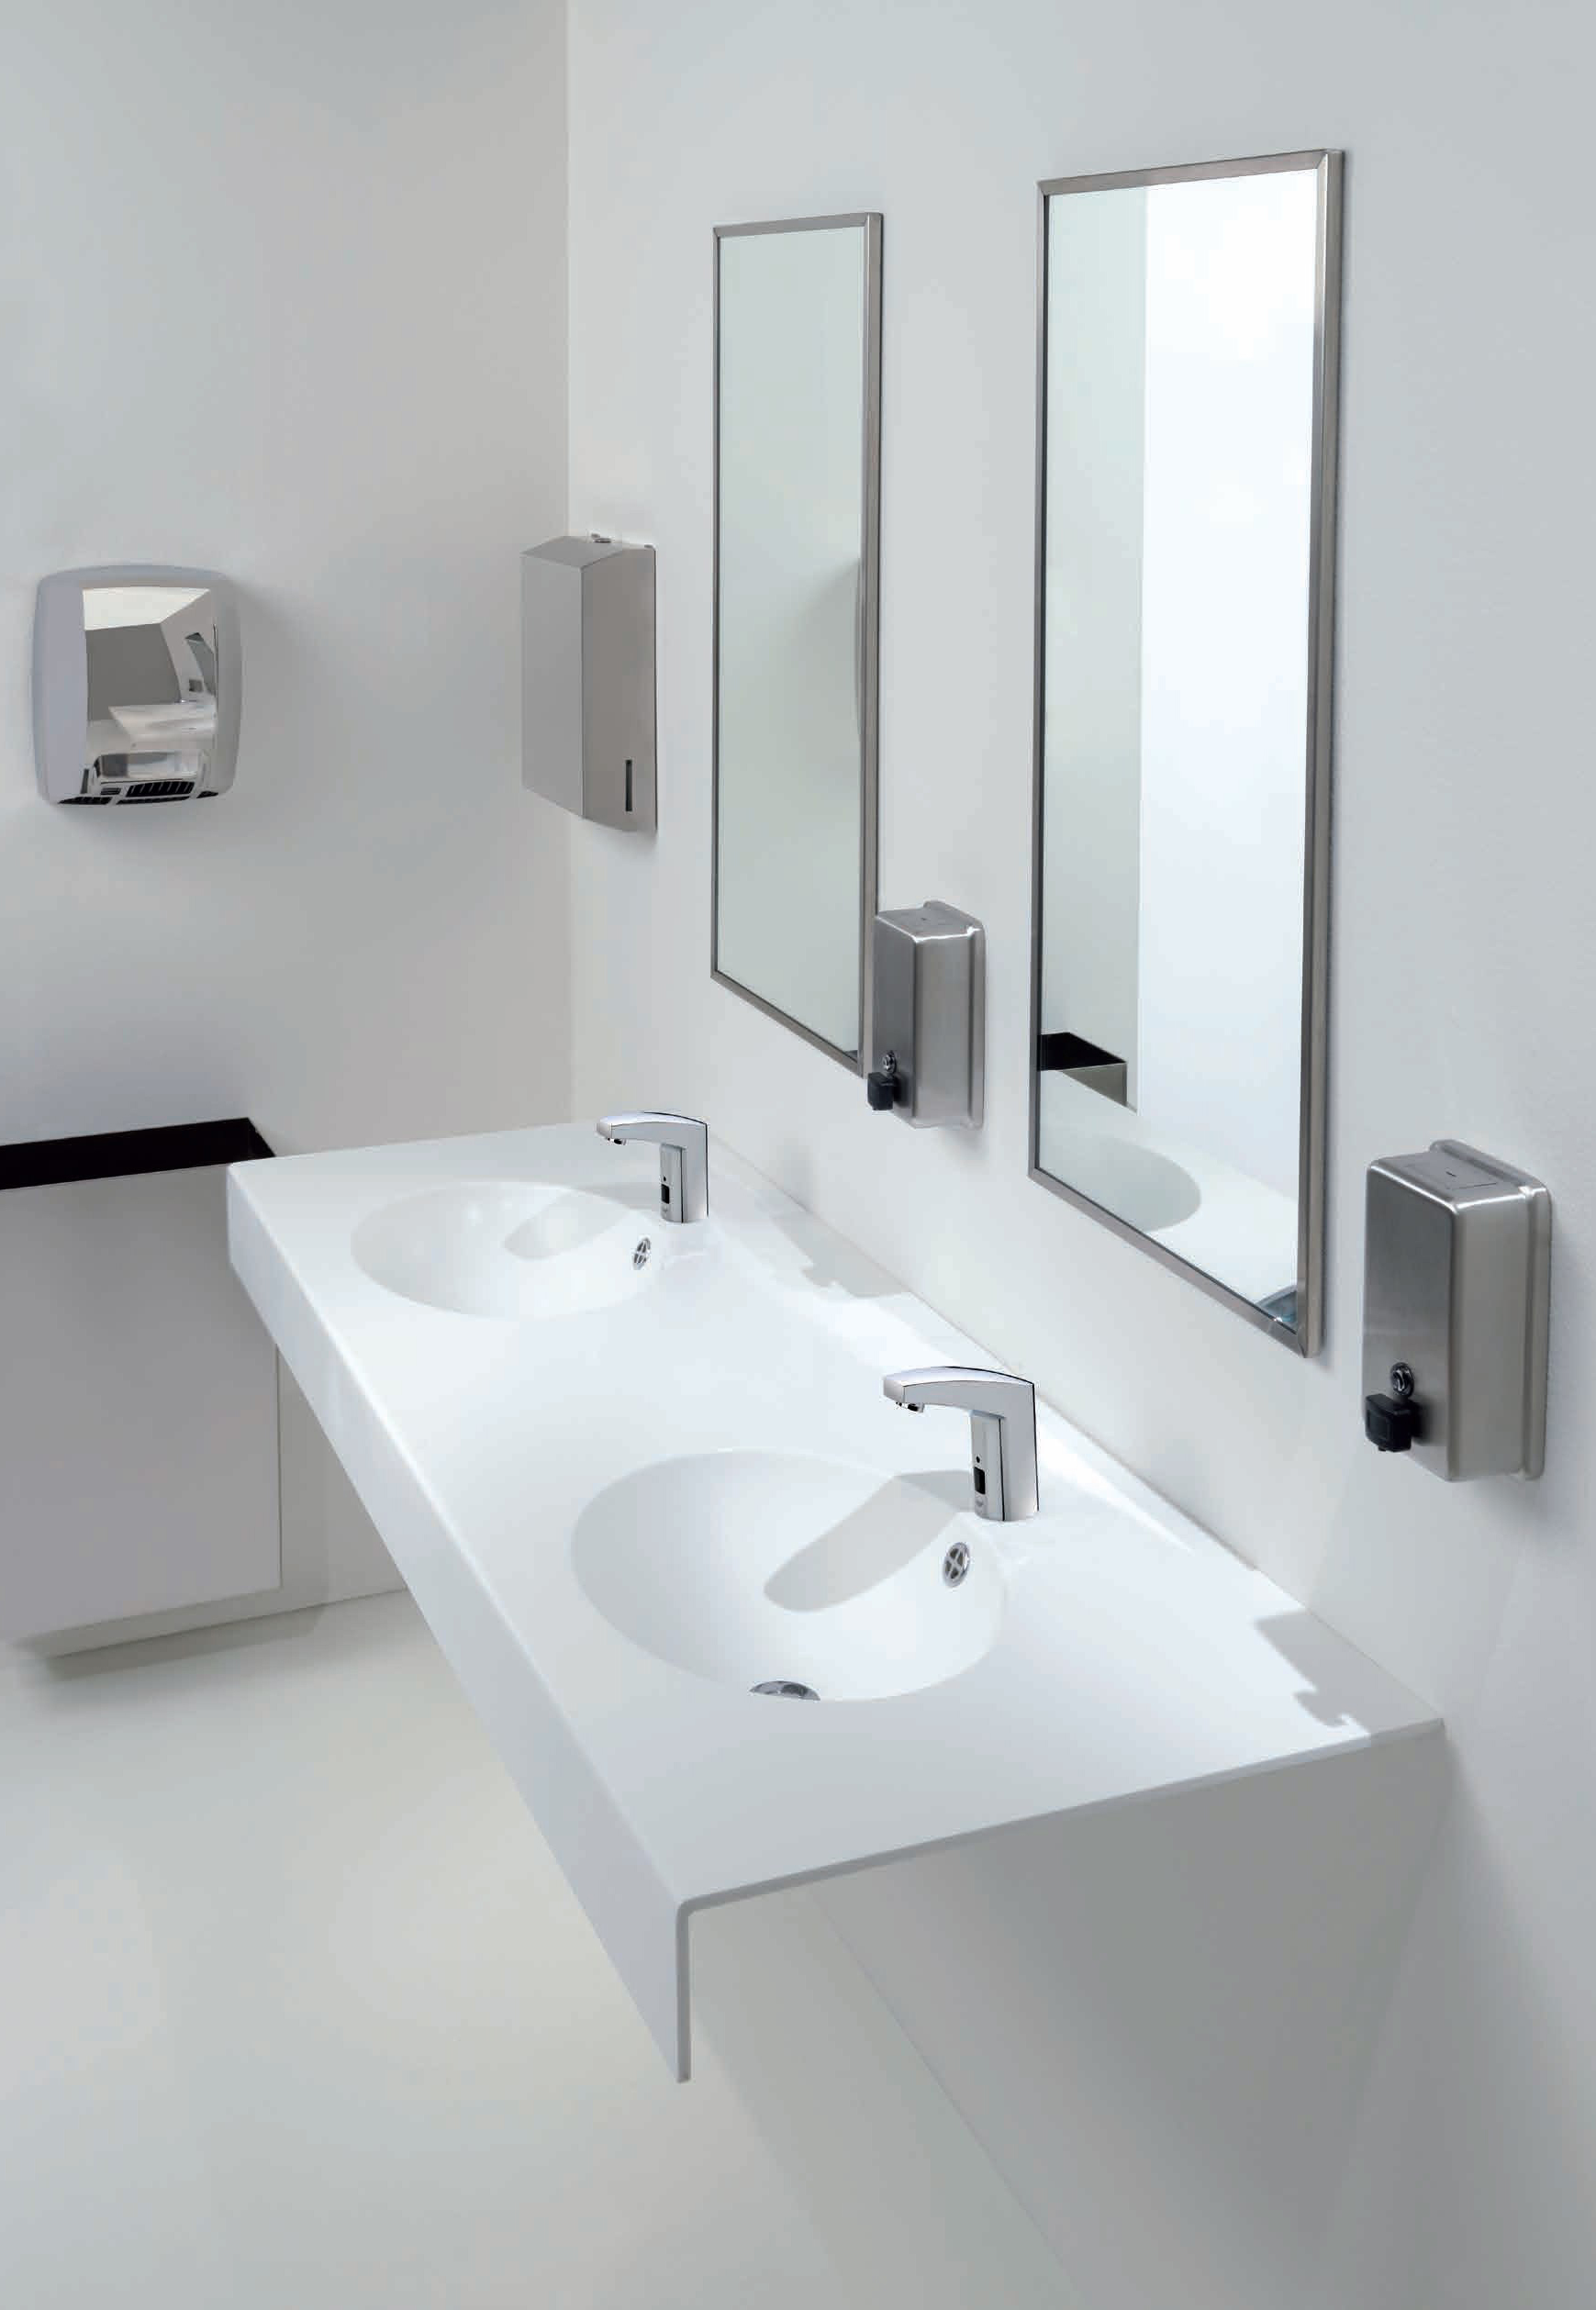 Corian Bathroom Countertops With Sink Backsplash Details